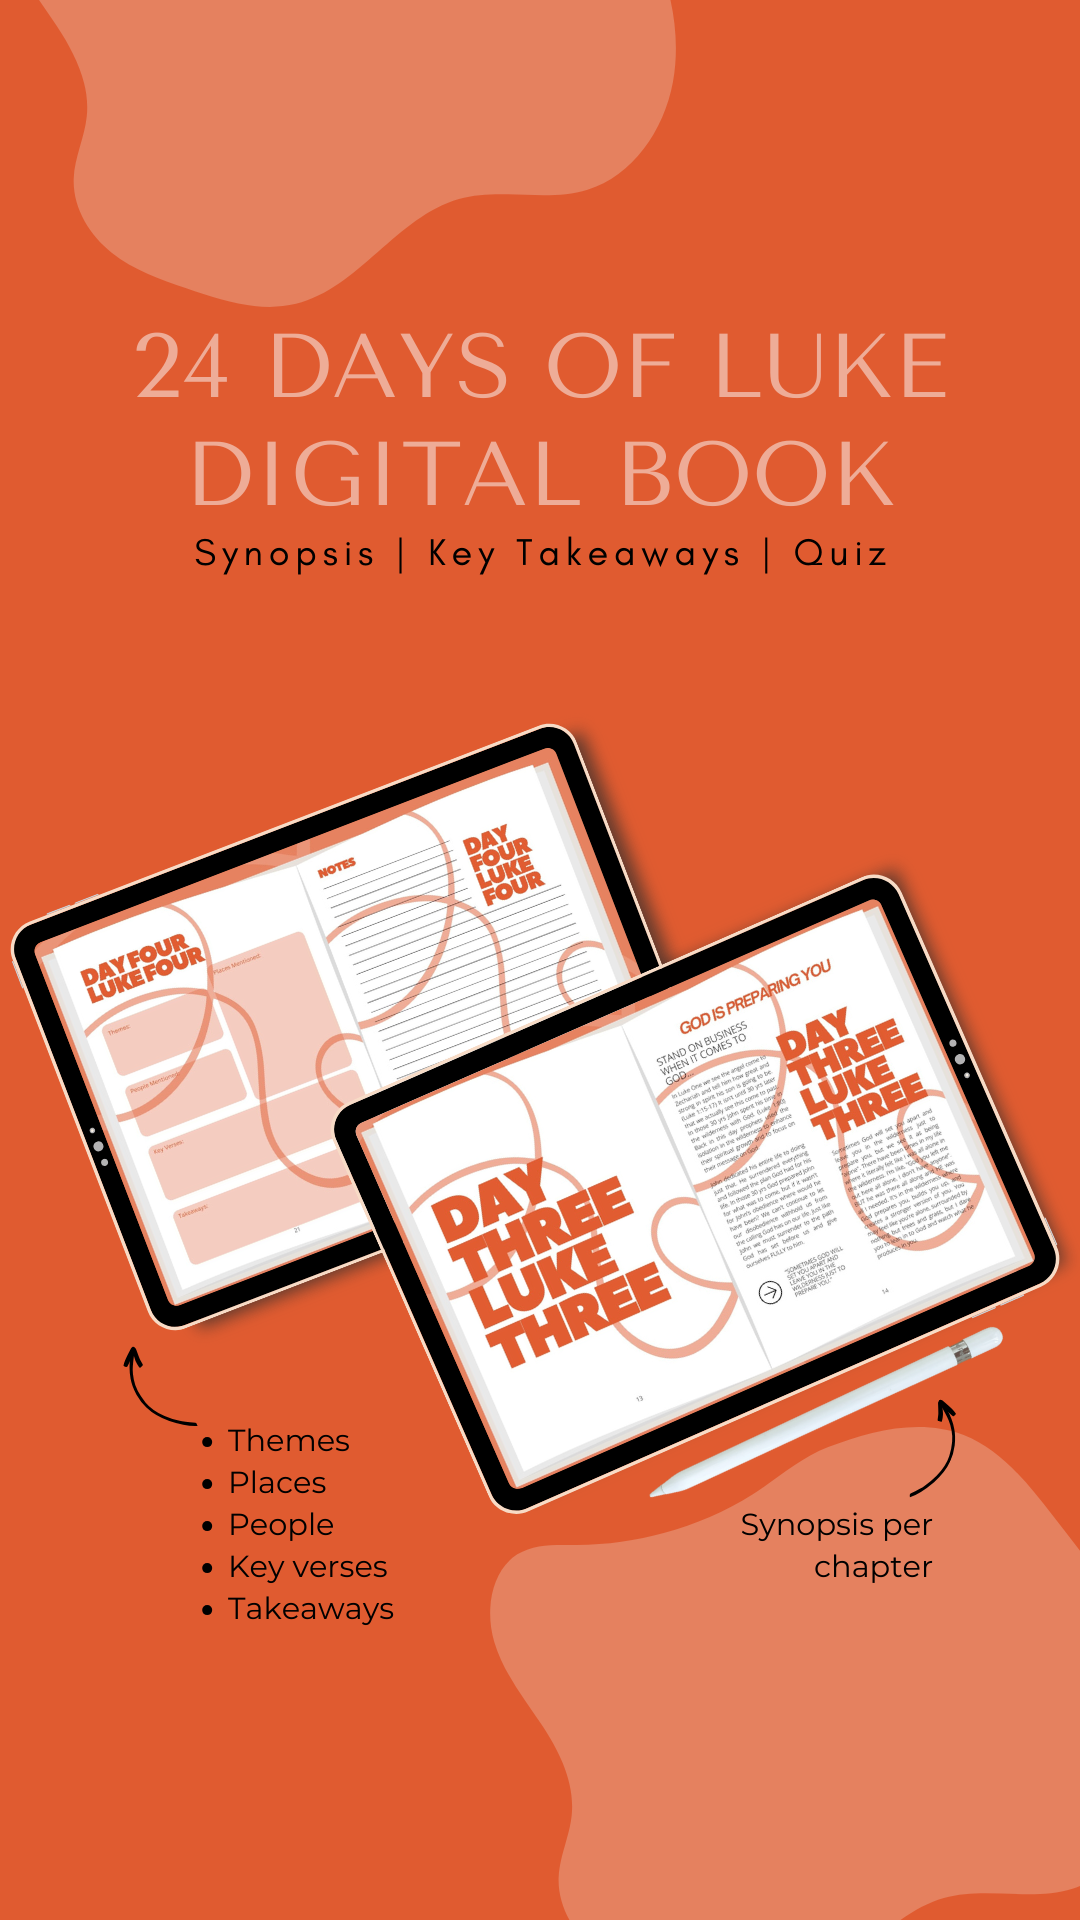 24 Days of Luke Digital Book